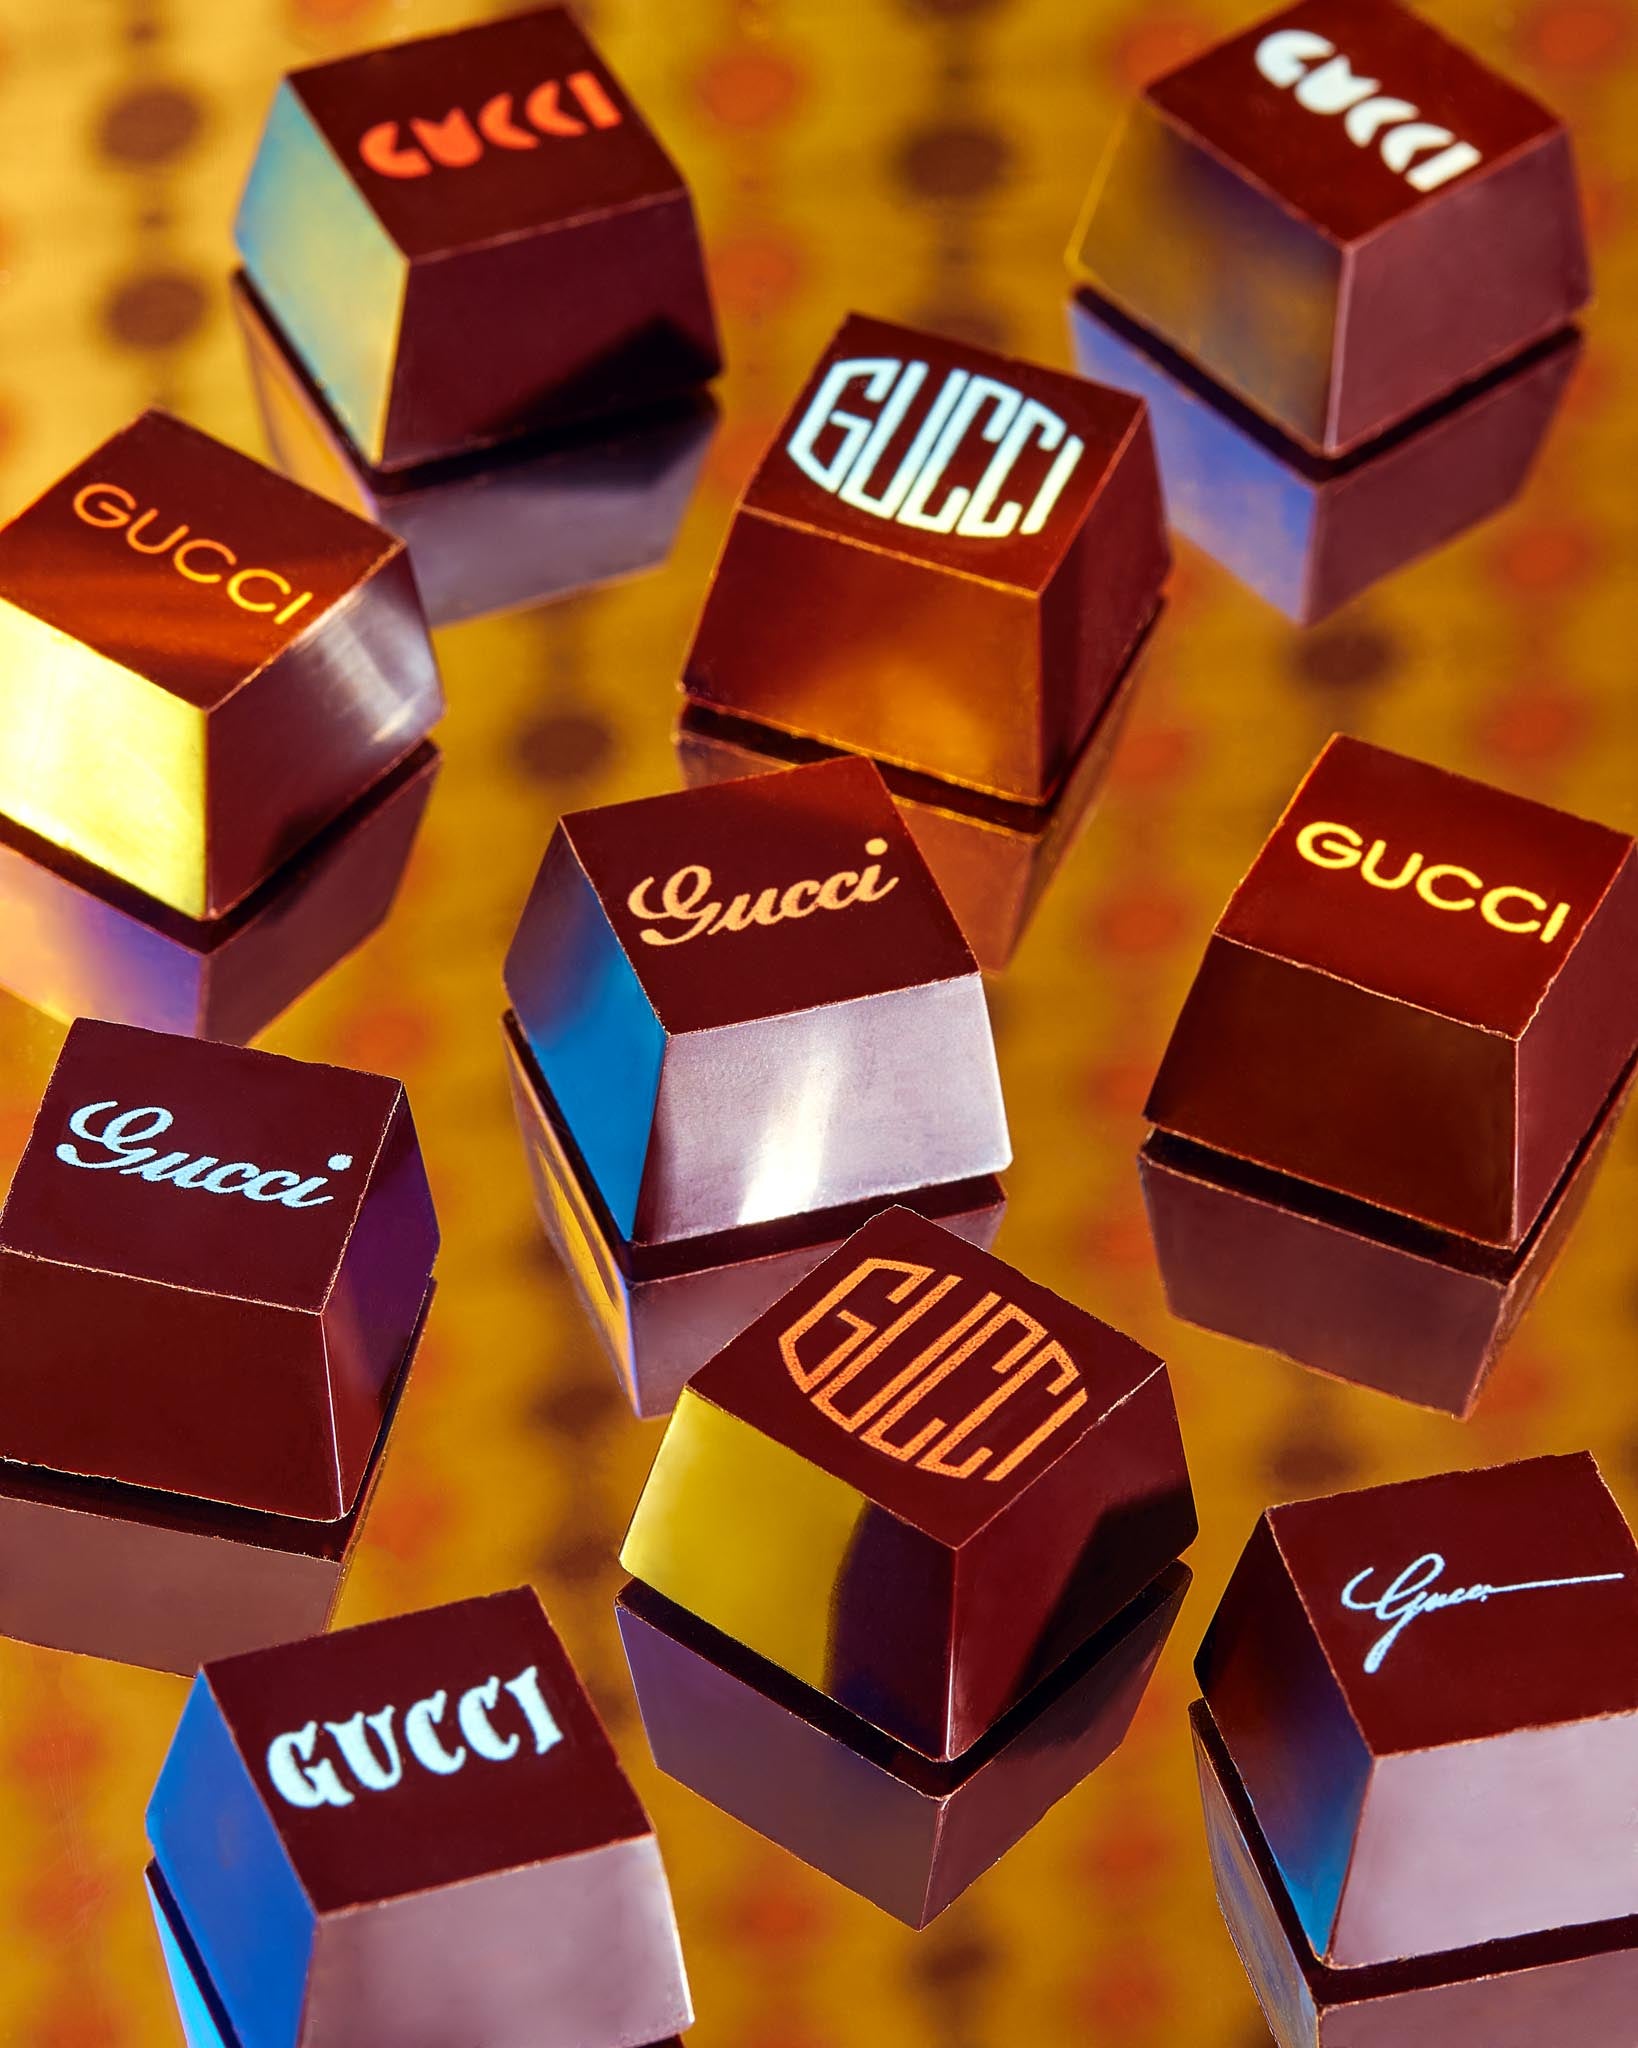 Personalized Chocolate & Custom Corporate Gifts | Chocomize